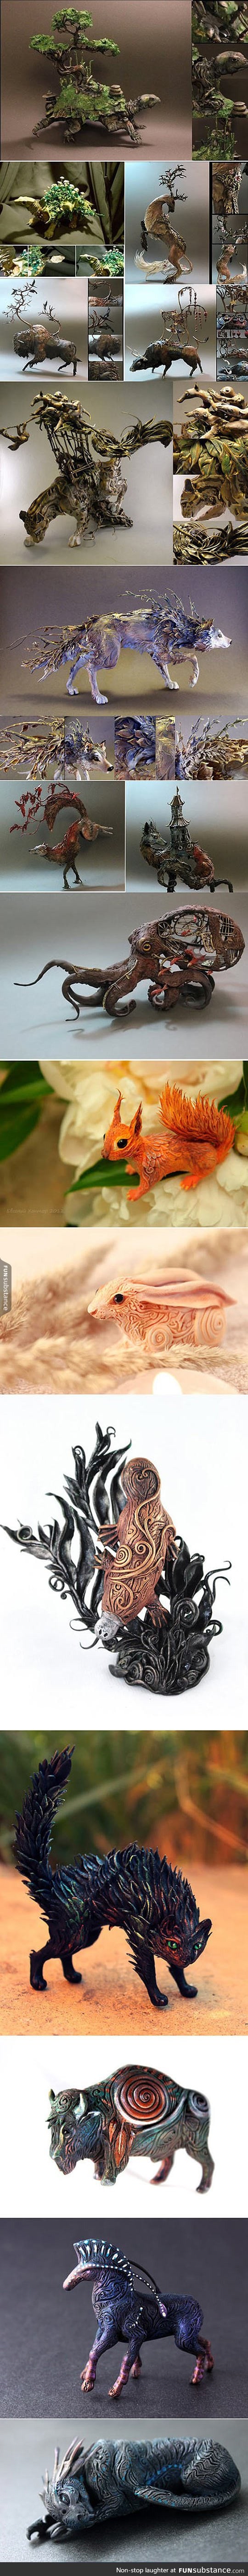 Mystical handmade animal art pieces